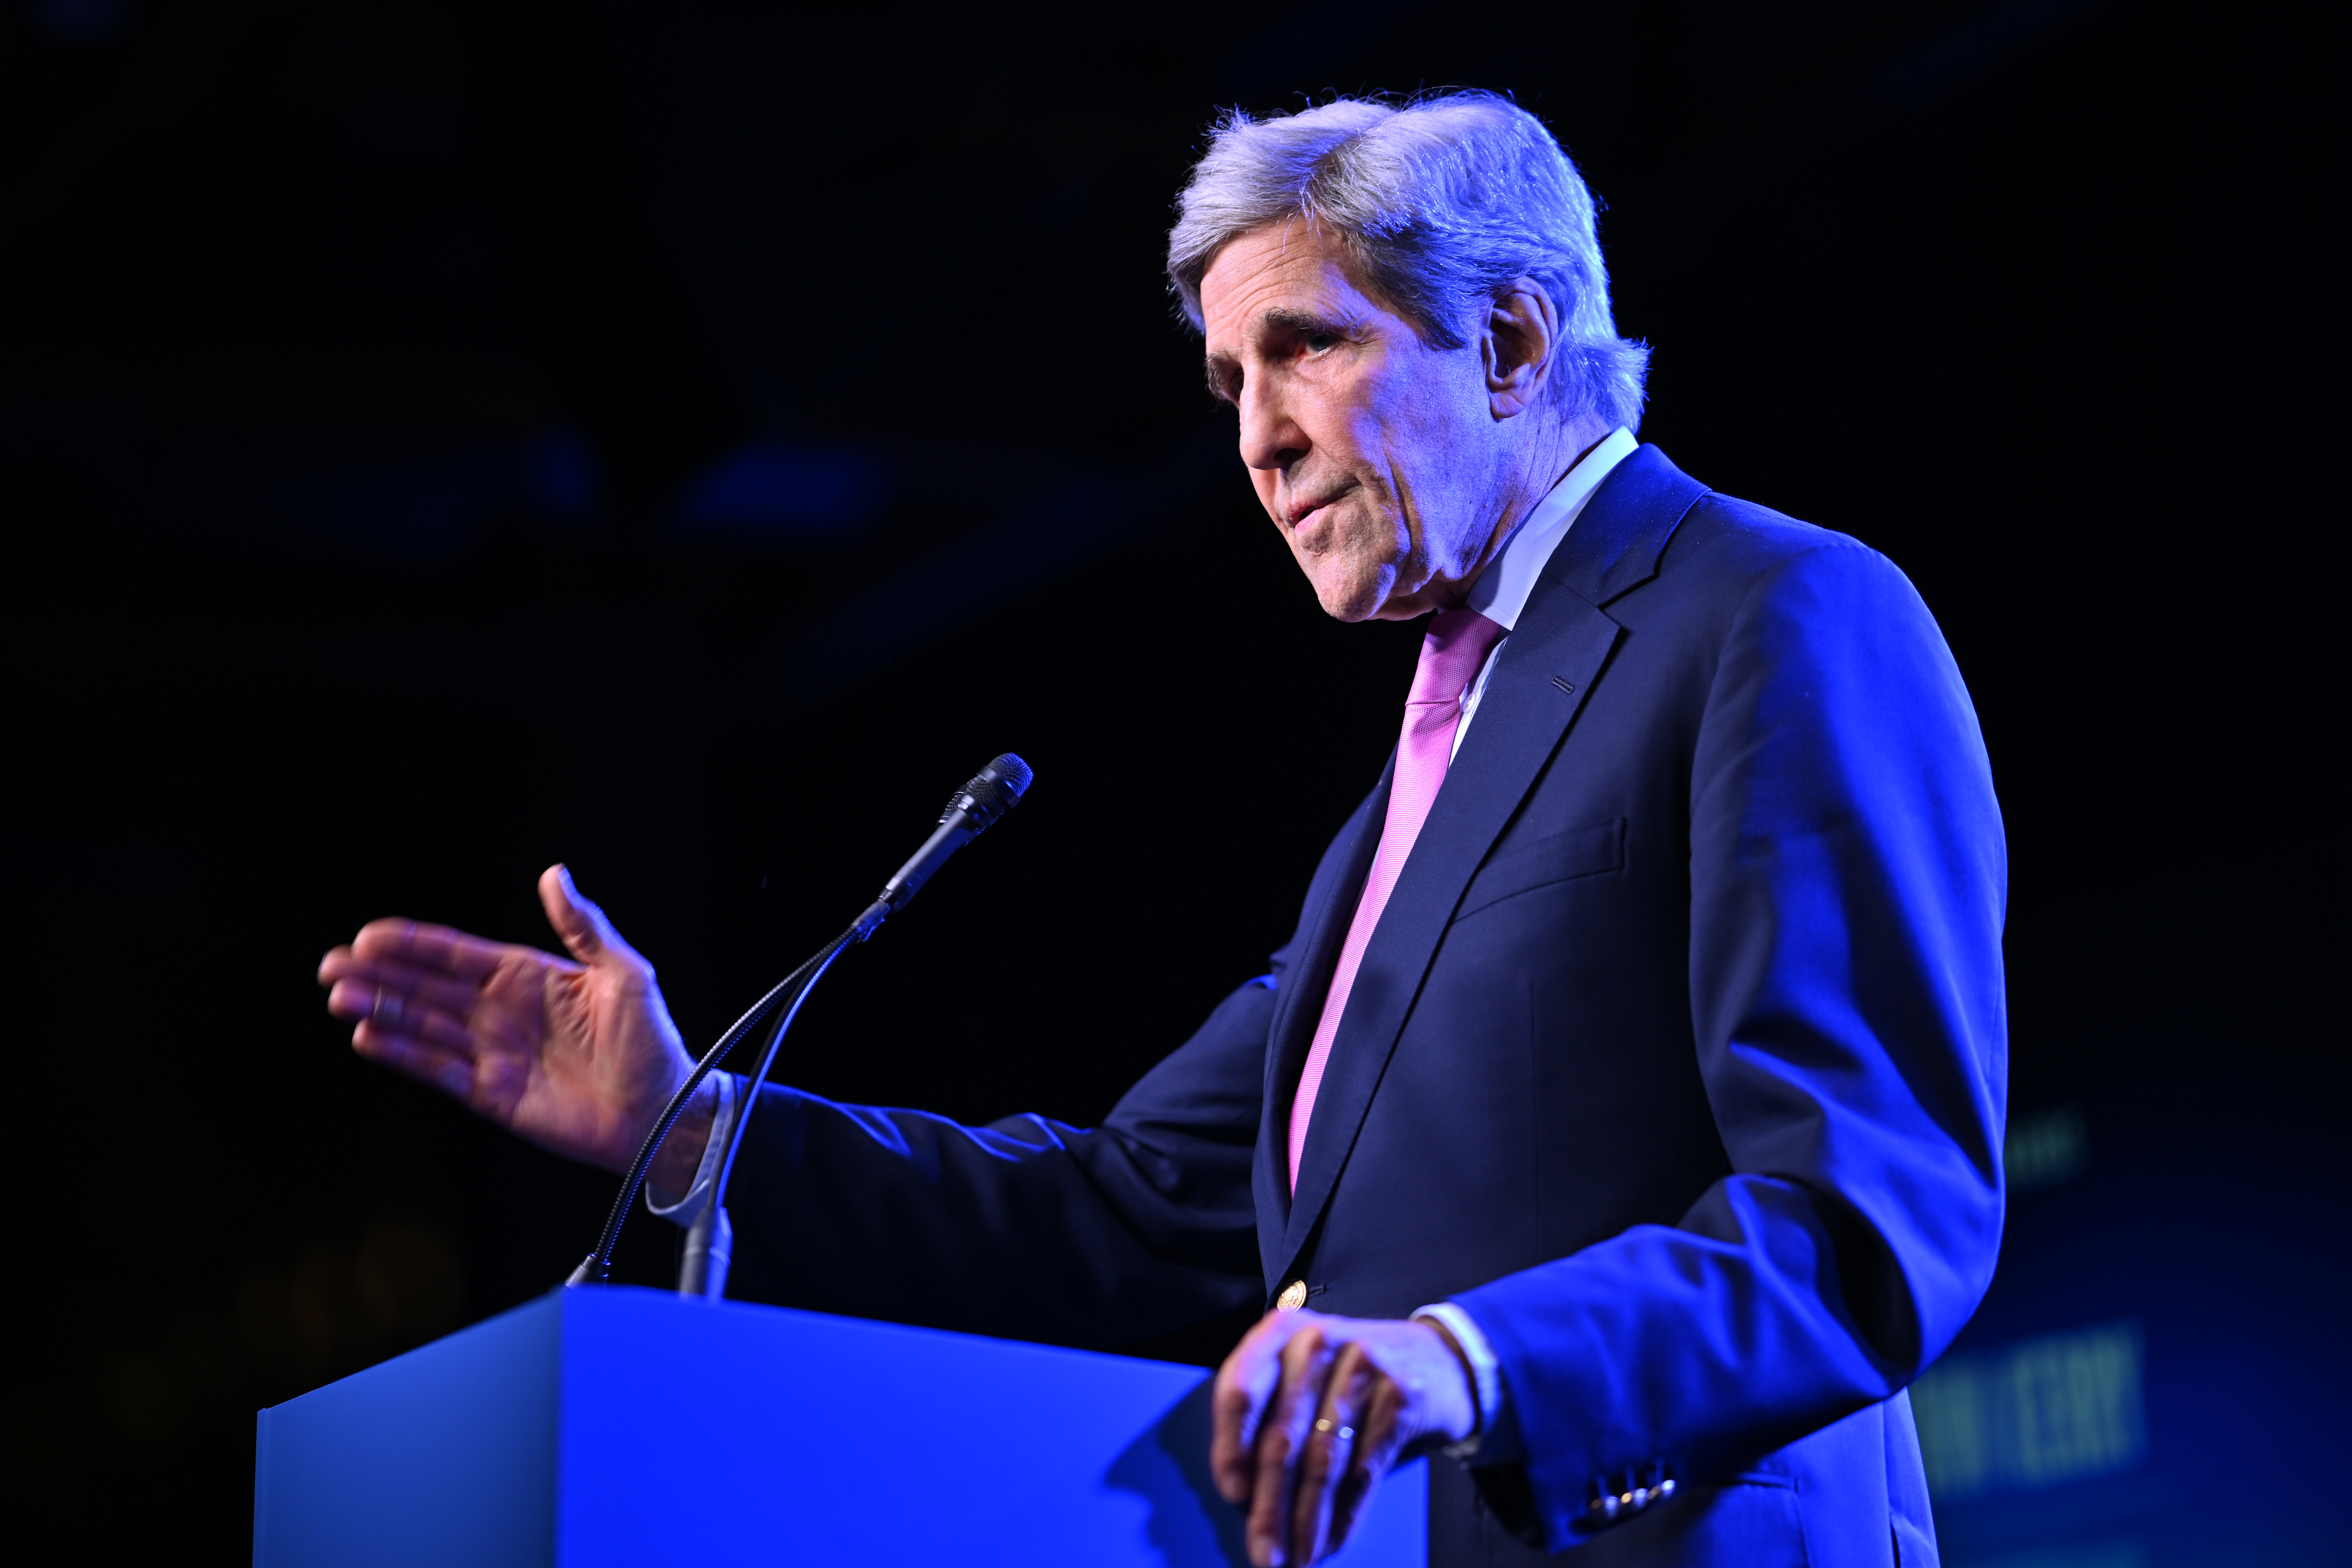 John Kerry On How To Break Through On The Climate Crisis